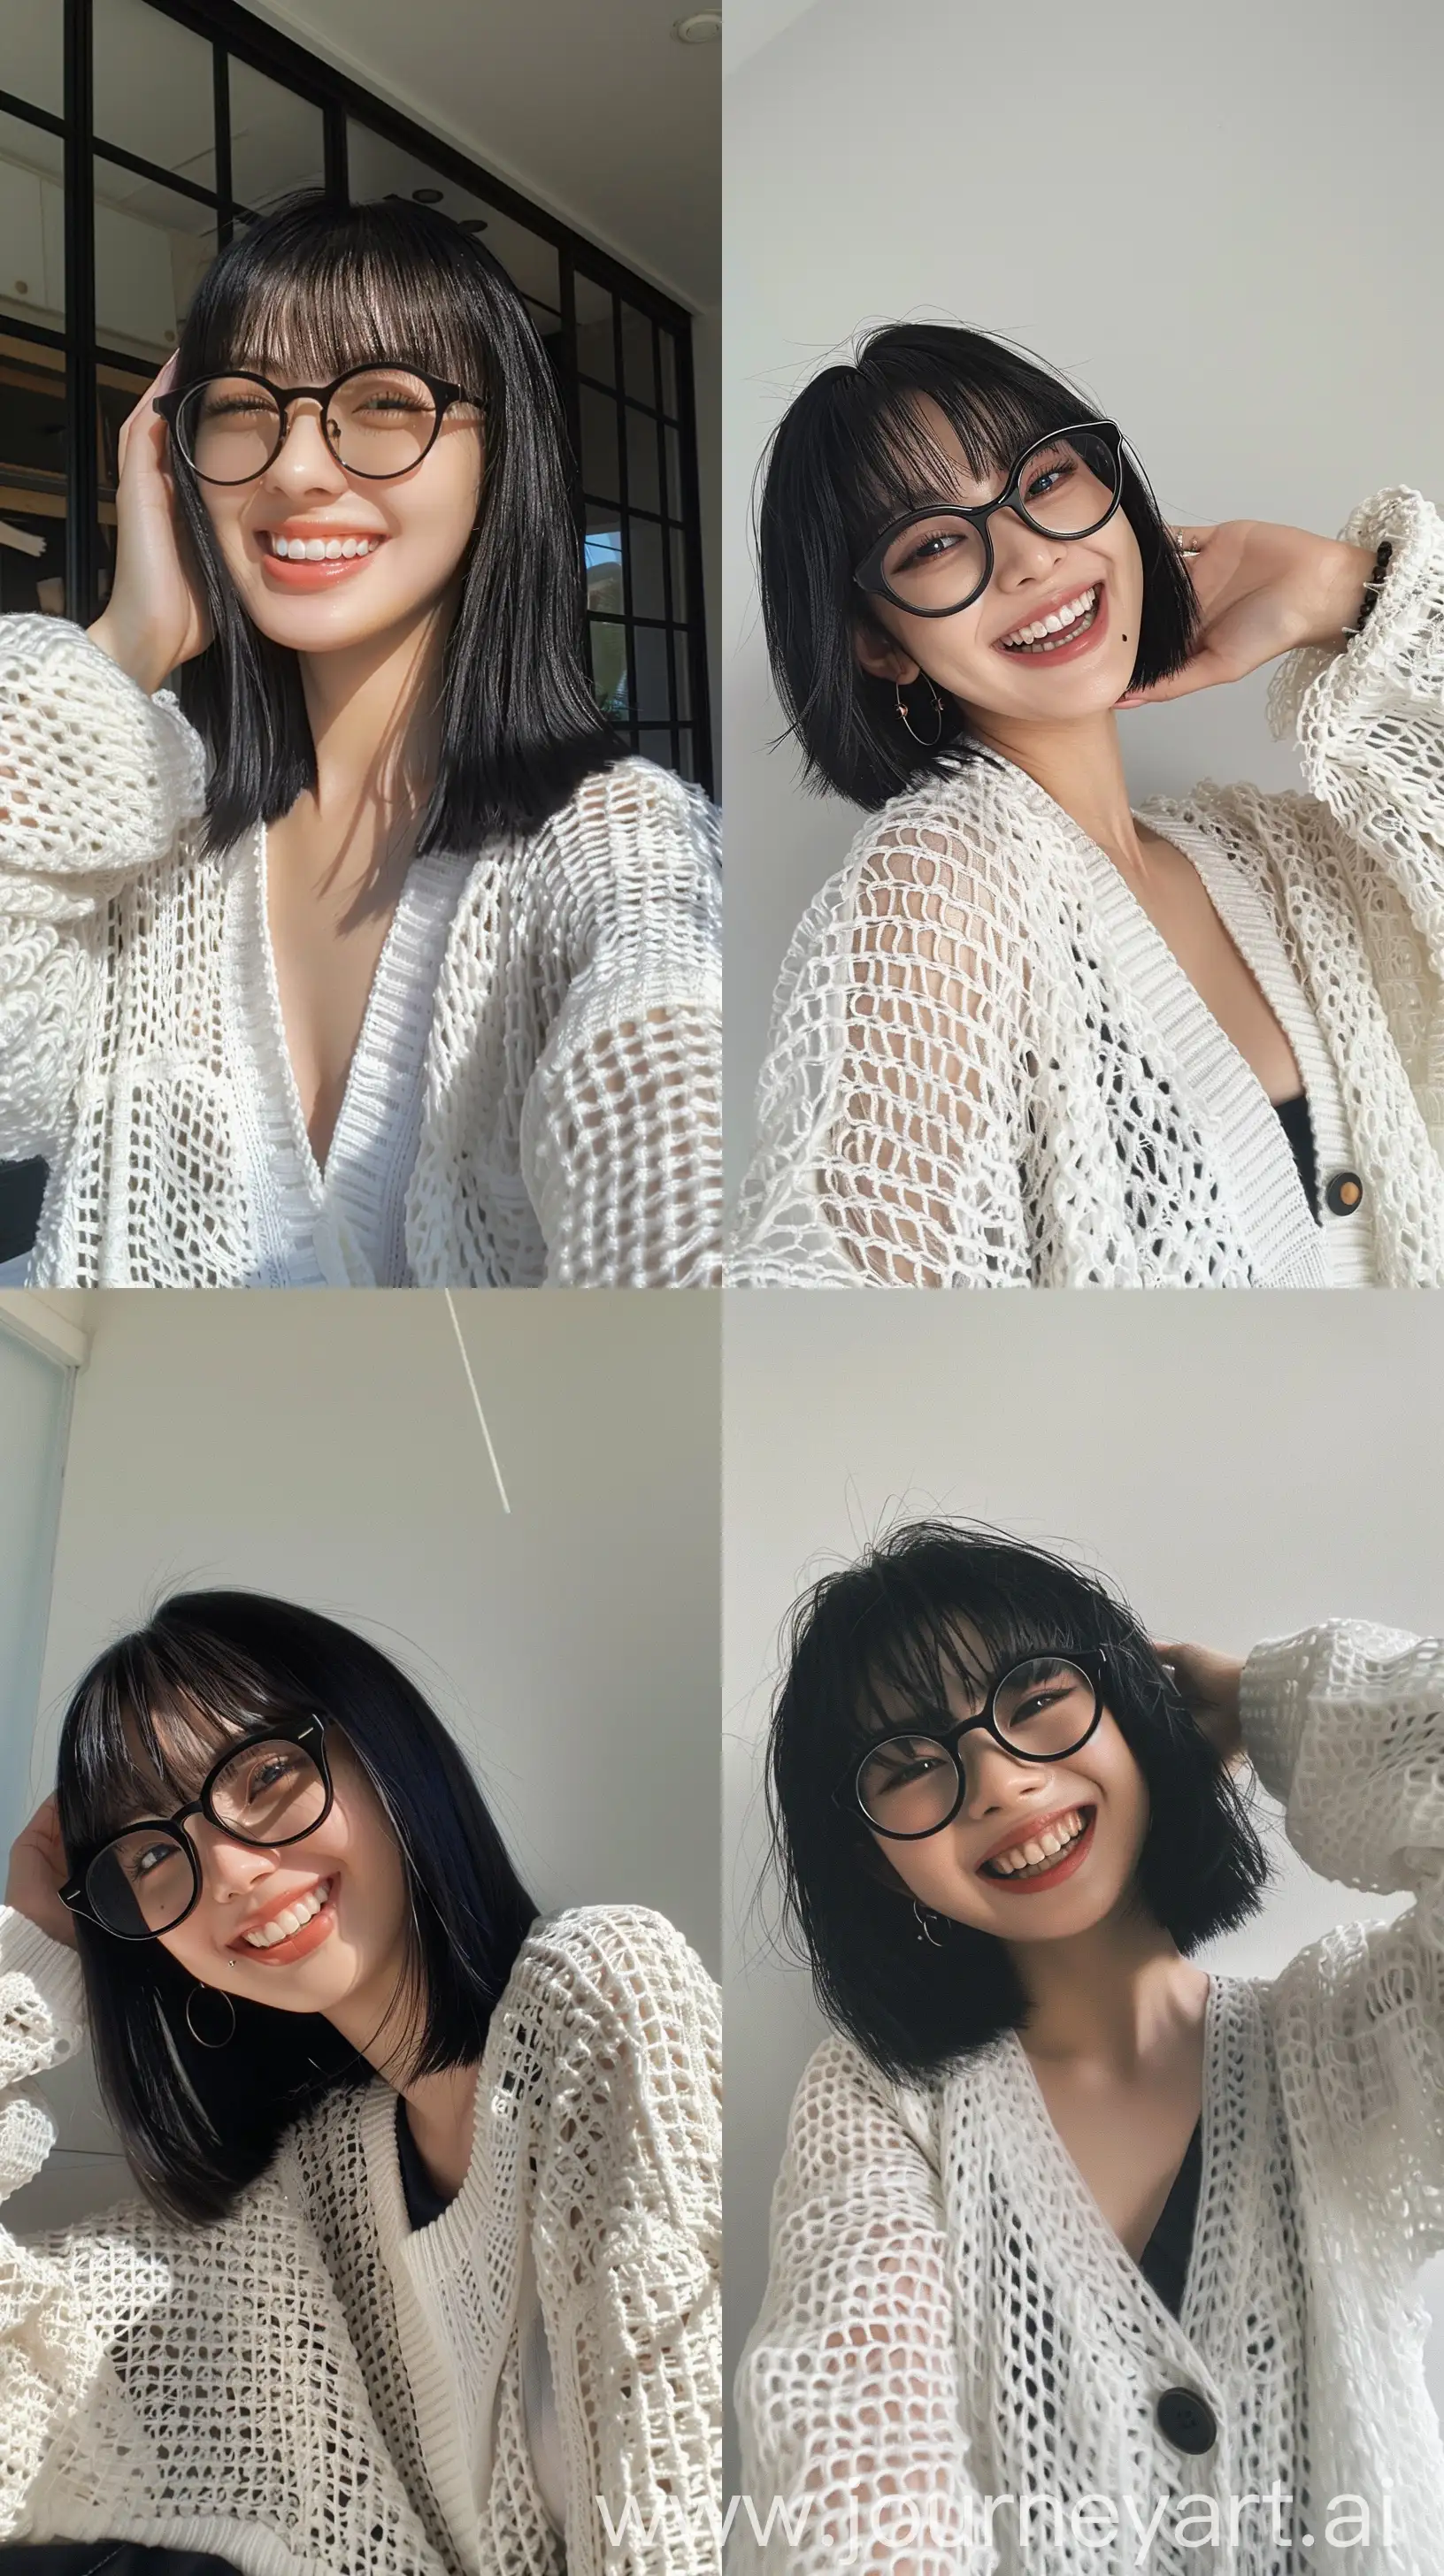 Stylish-Blackpinks-Jennie-Selfie-with-Chic-White-Net-Cardigan-and-Black-Frame-Glasses